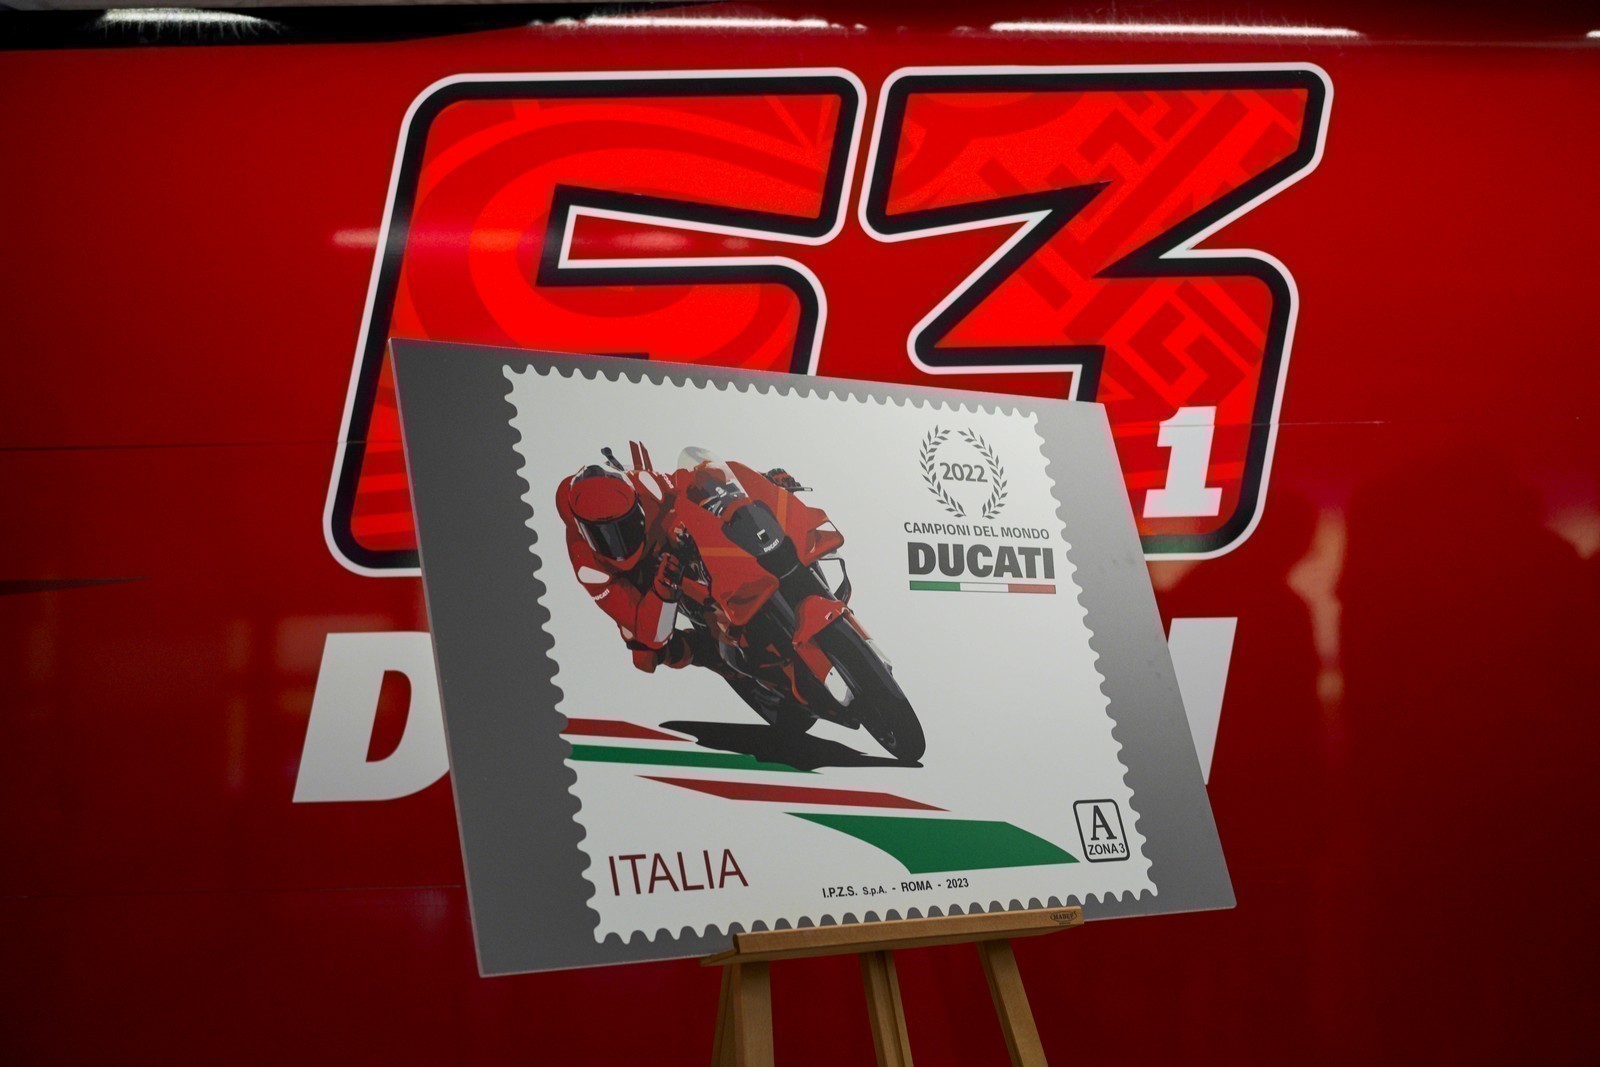 Francobollo Ducati 4 UC519484 High